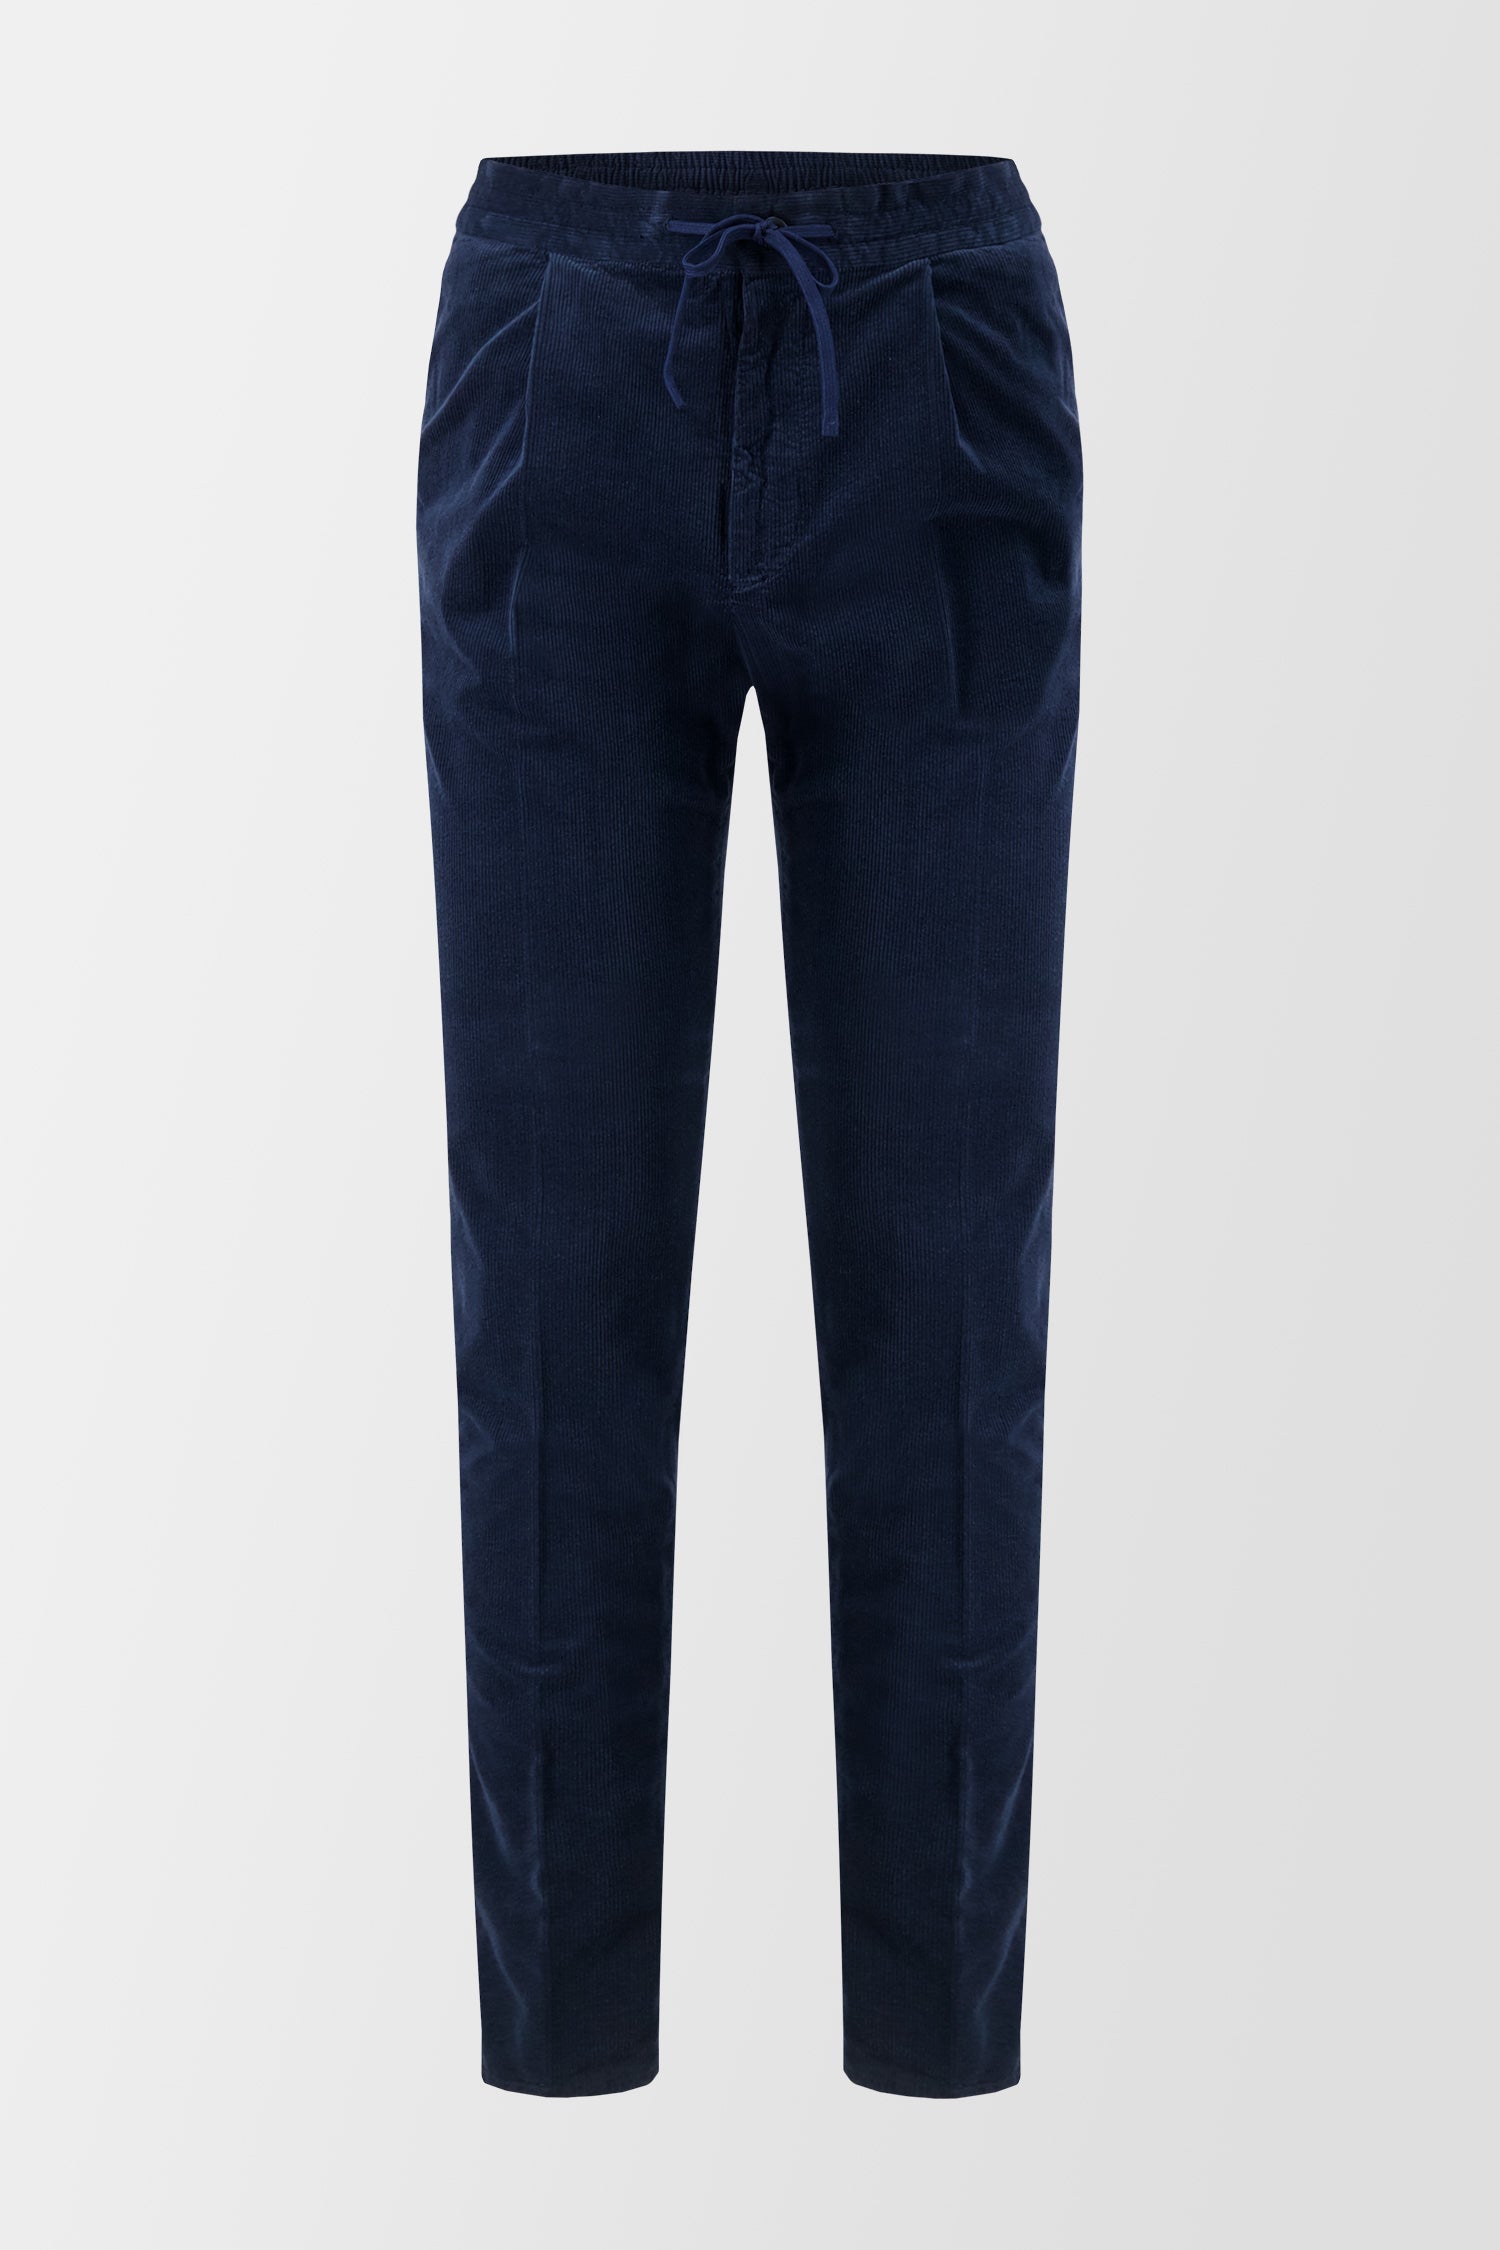 Incotex Blue Casual Trousers